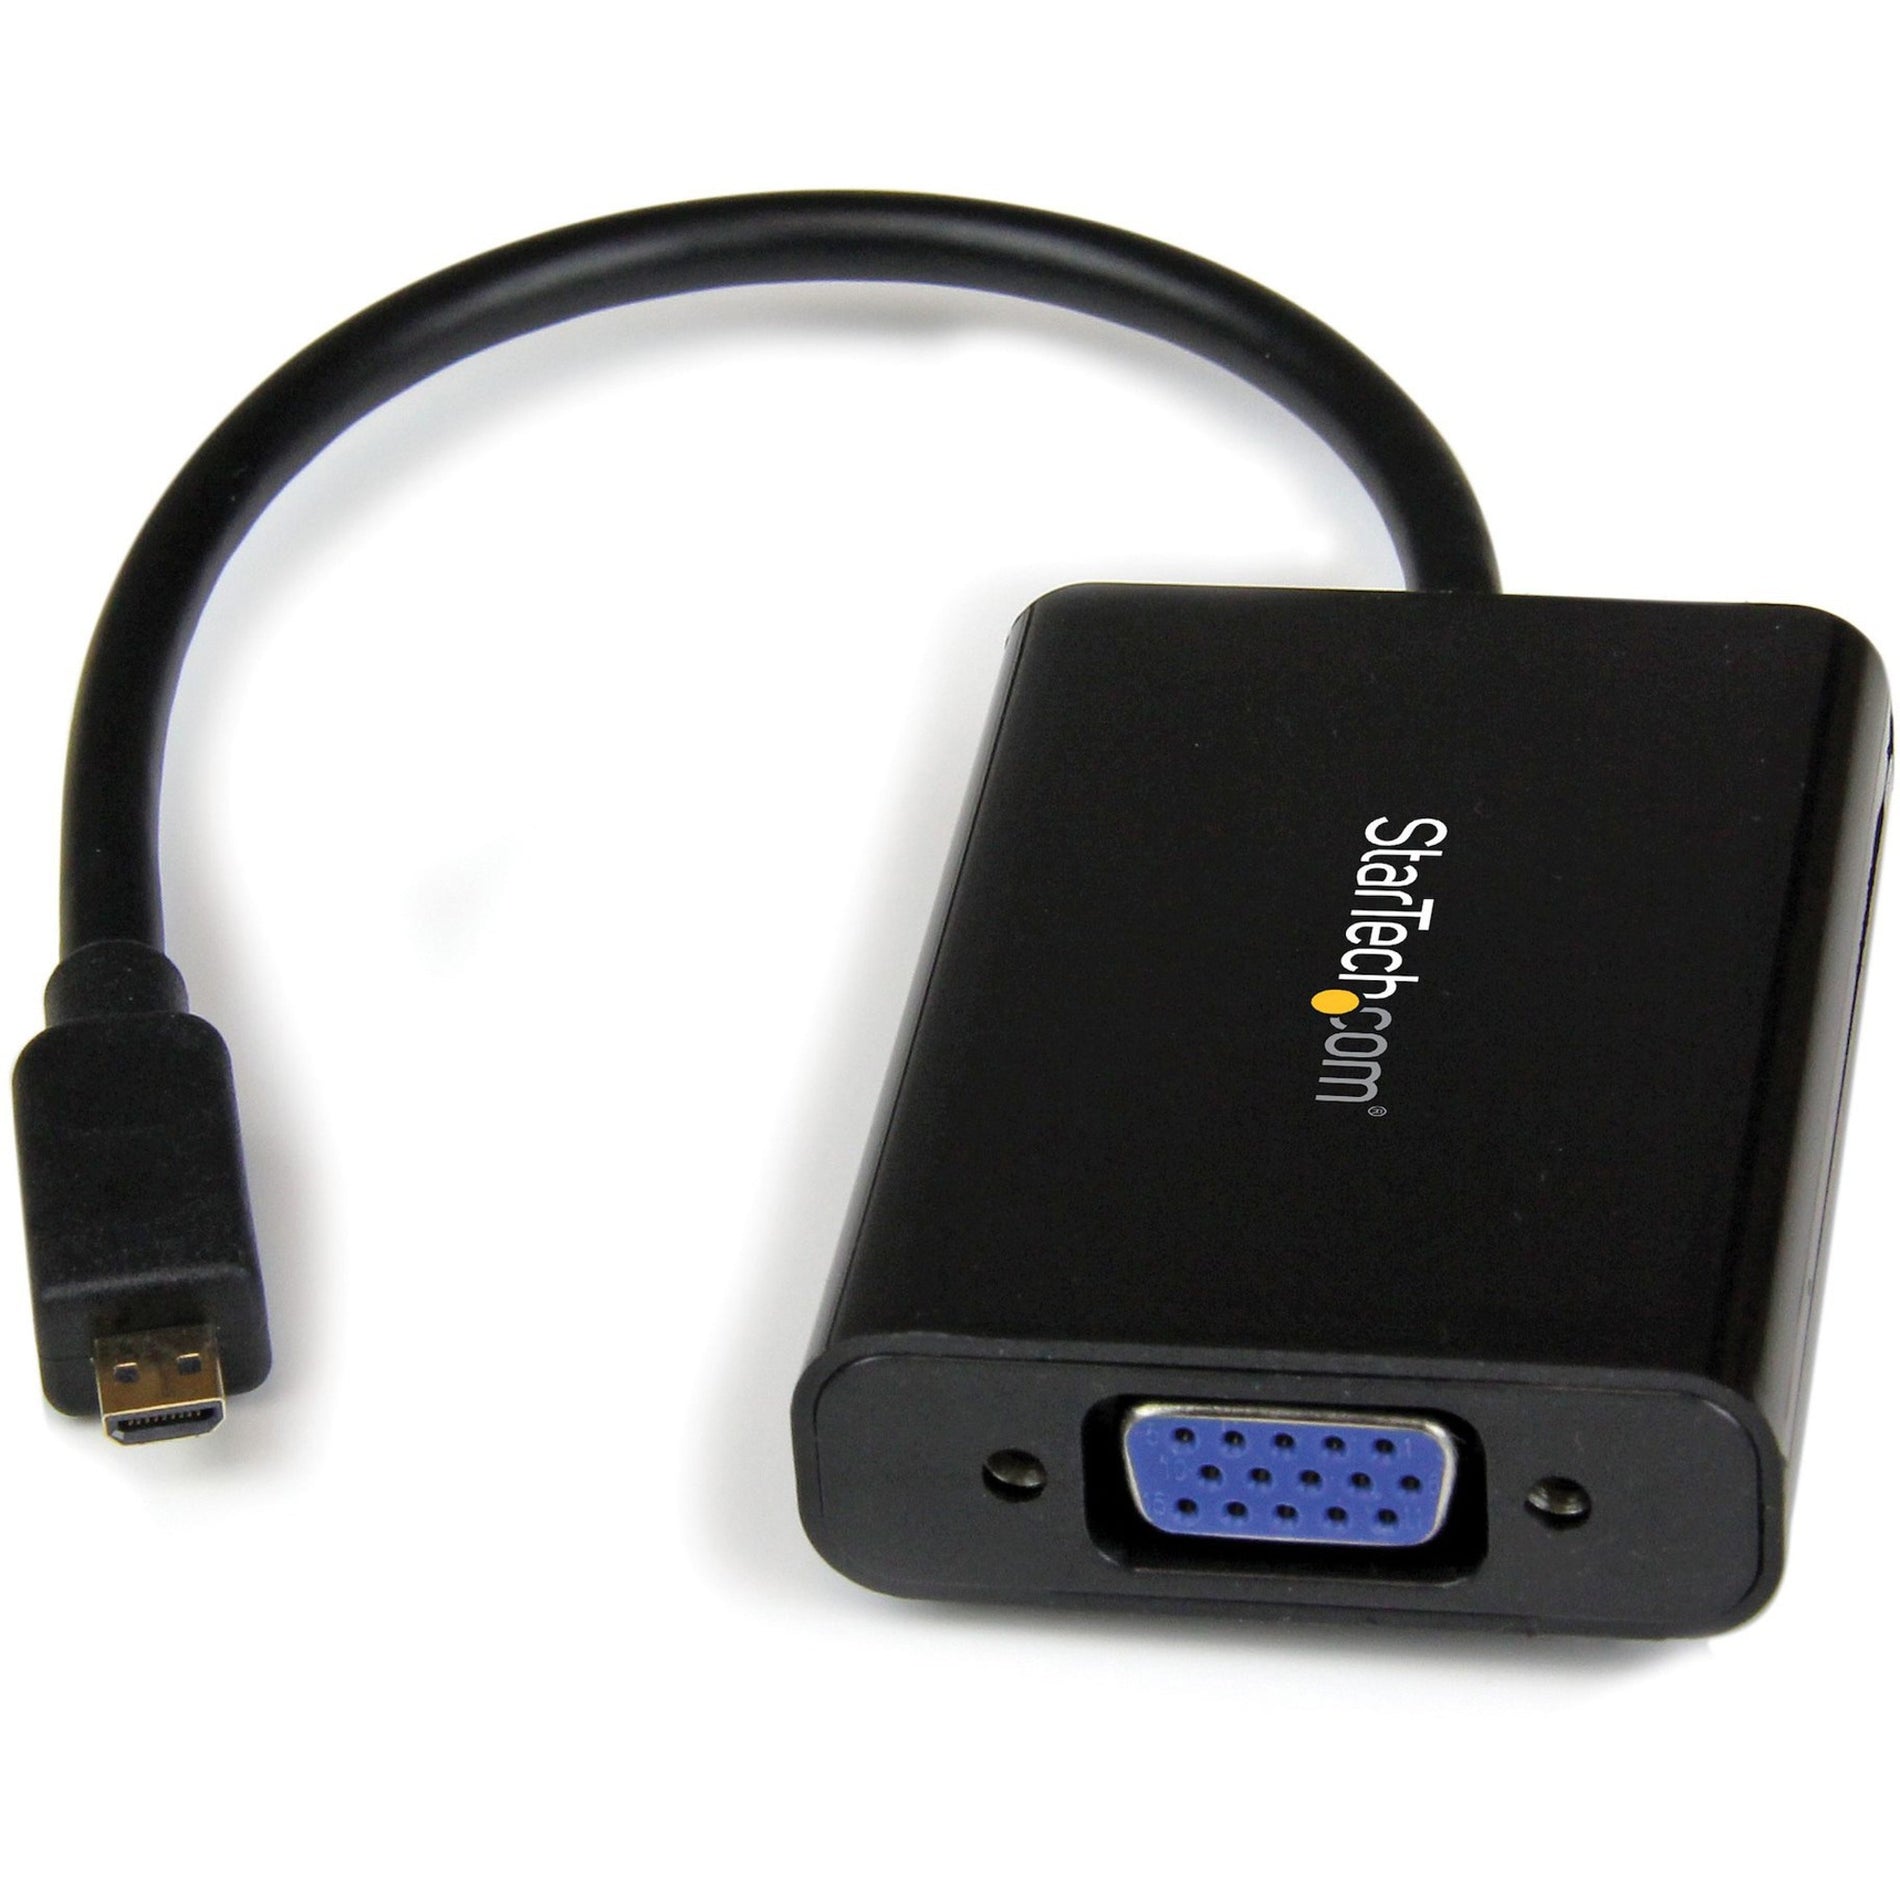 StarTech.com MCHD2VGAA2 微型HDMI转VGA适配器转换器，1920x1200，带音频，适用于智能手机，超级本，平板电脑 星美科技